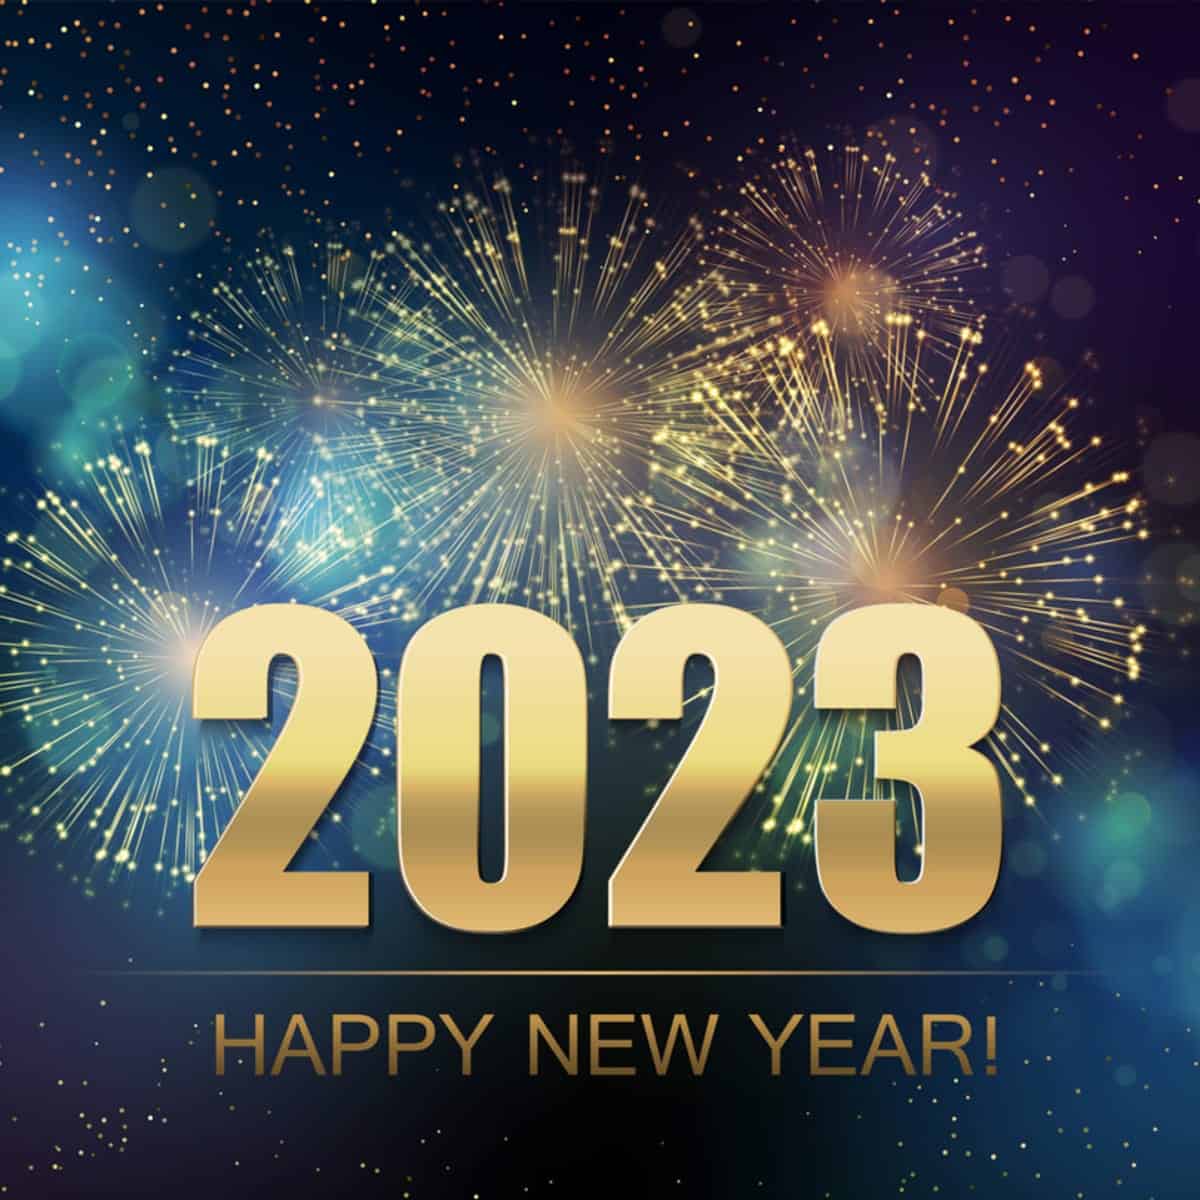 Happy New Year 2023 wallpapper